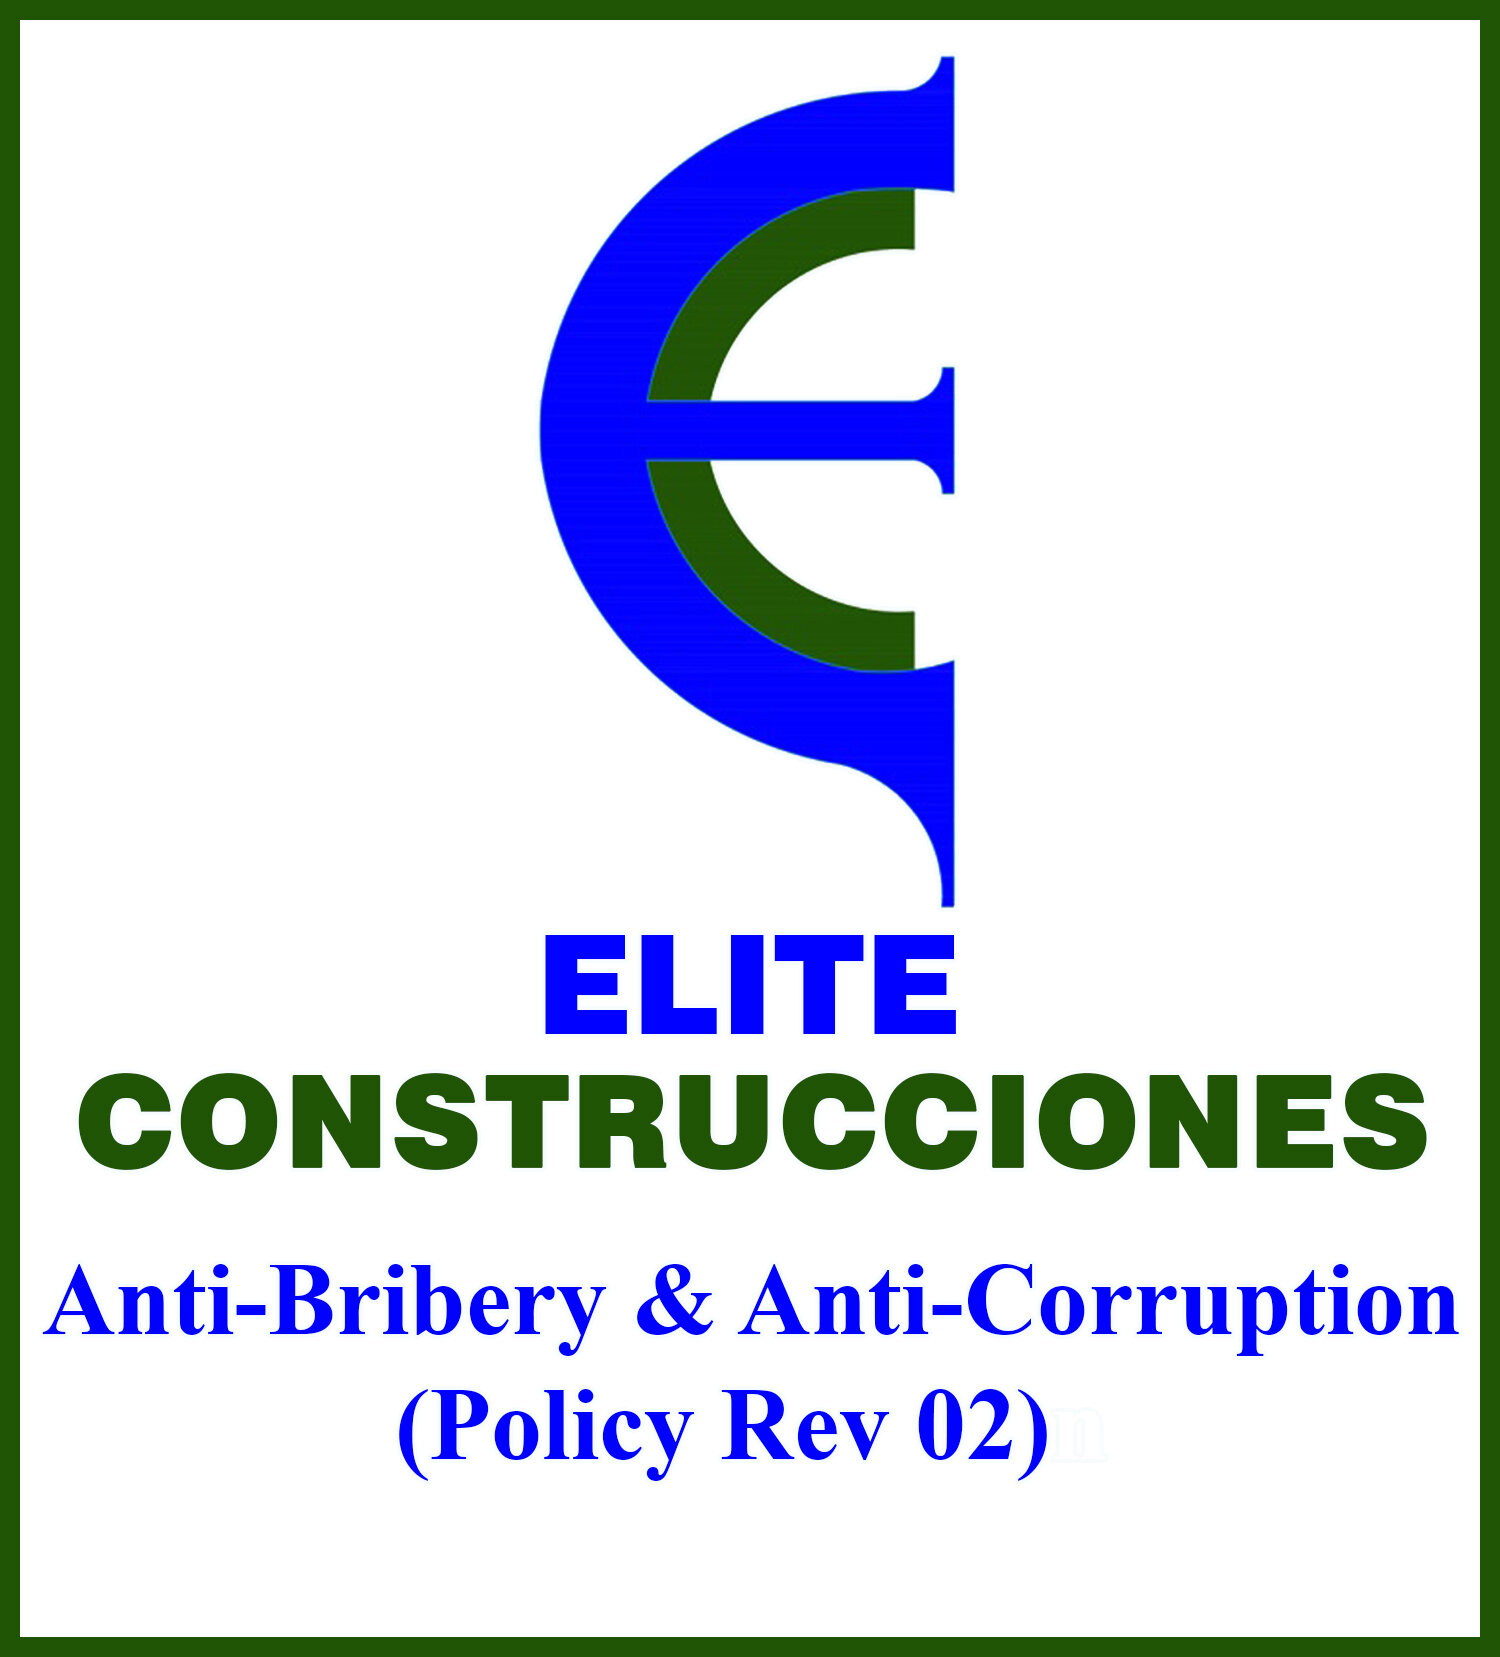 04- Anti-Bribery & Anti-Corruption Policy Rev 02 spaninsh.jpg